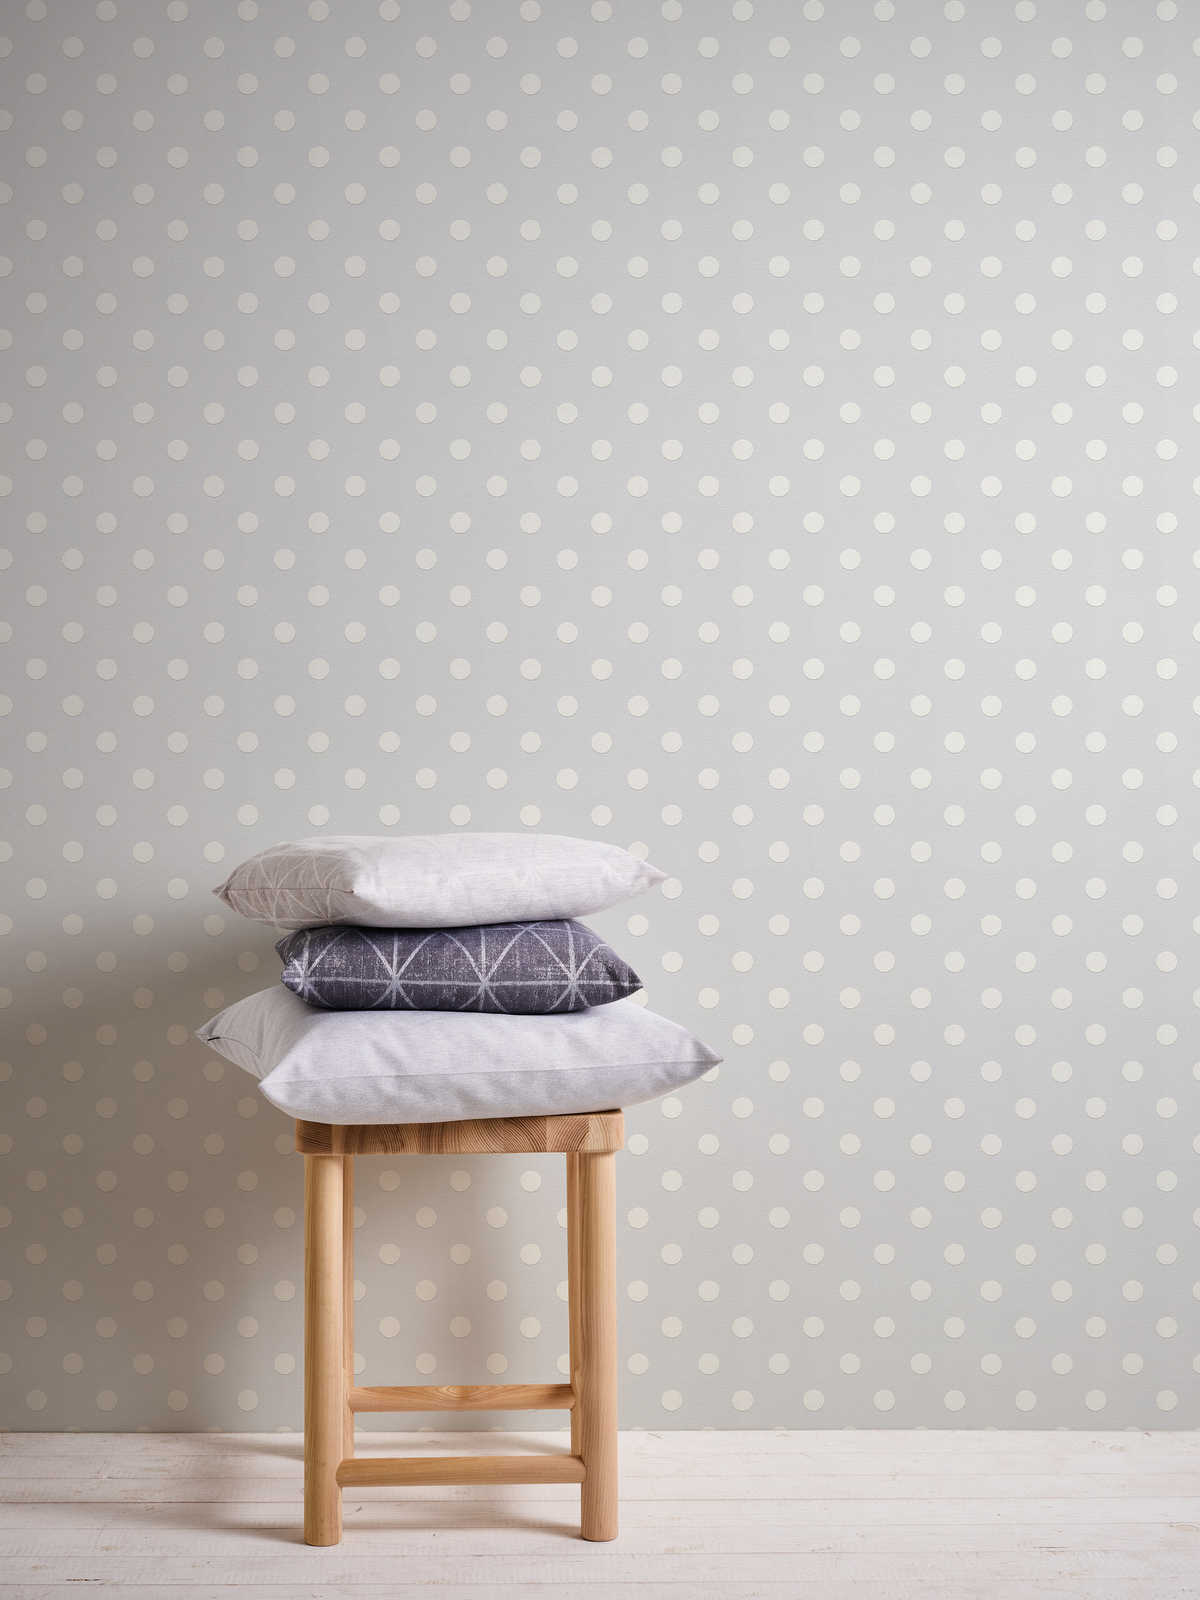             Polka dots design wallpaper - grey, white
        